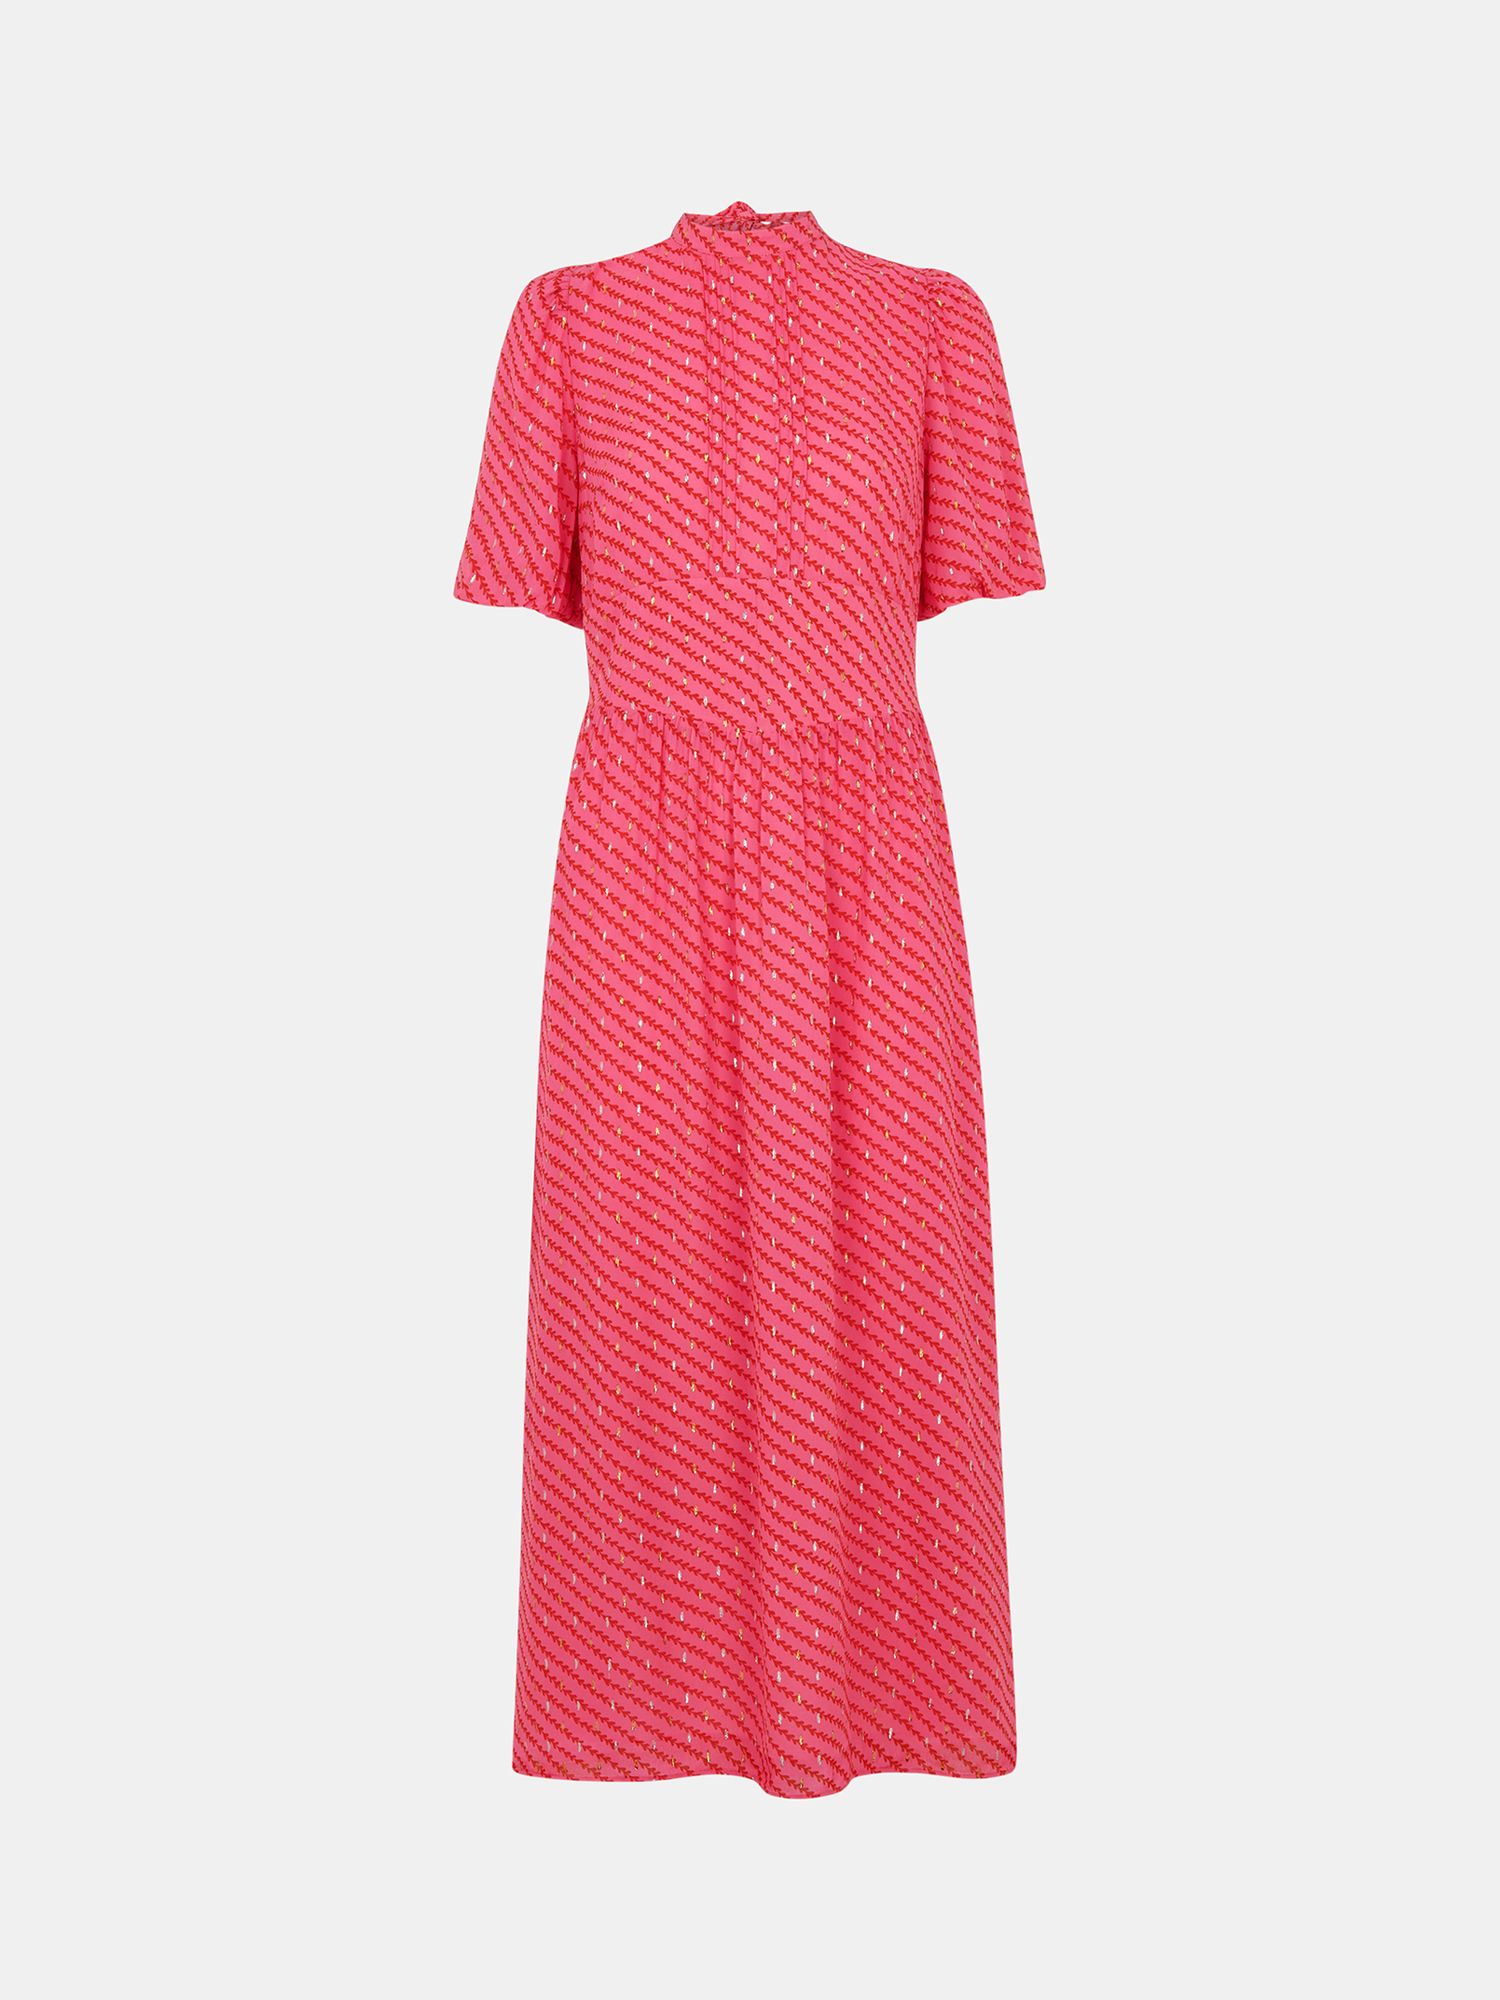 Whistles Diagonal Leaf Blair Ecovero Dress, Pink/Multi, 16